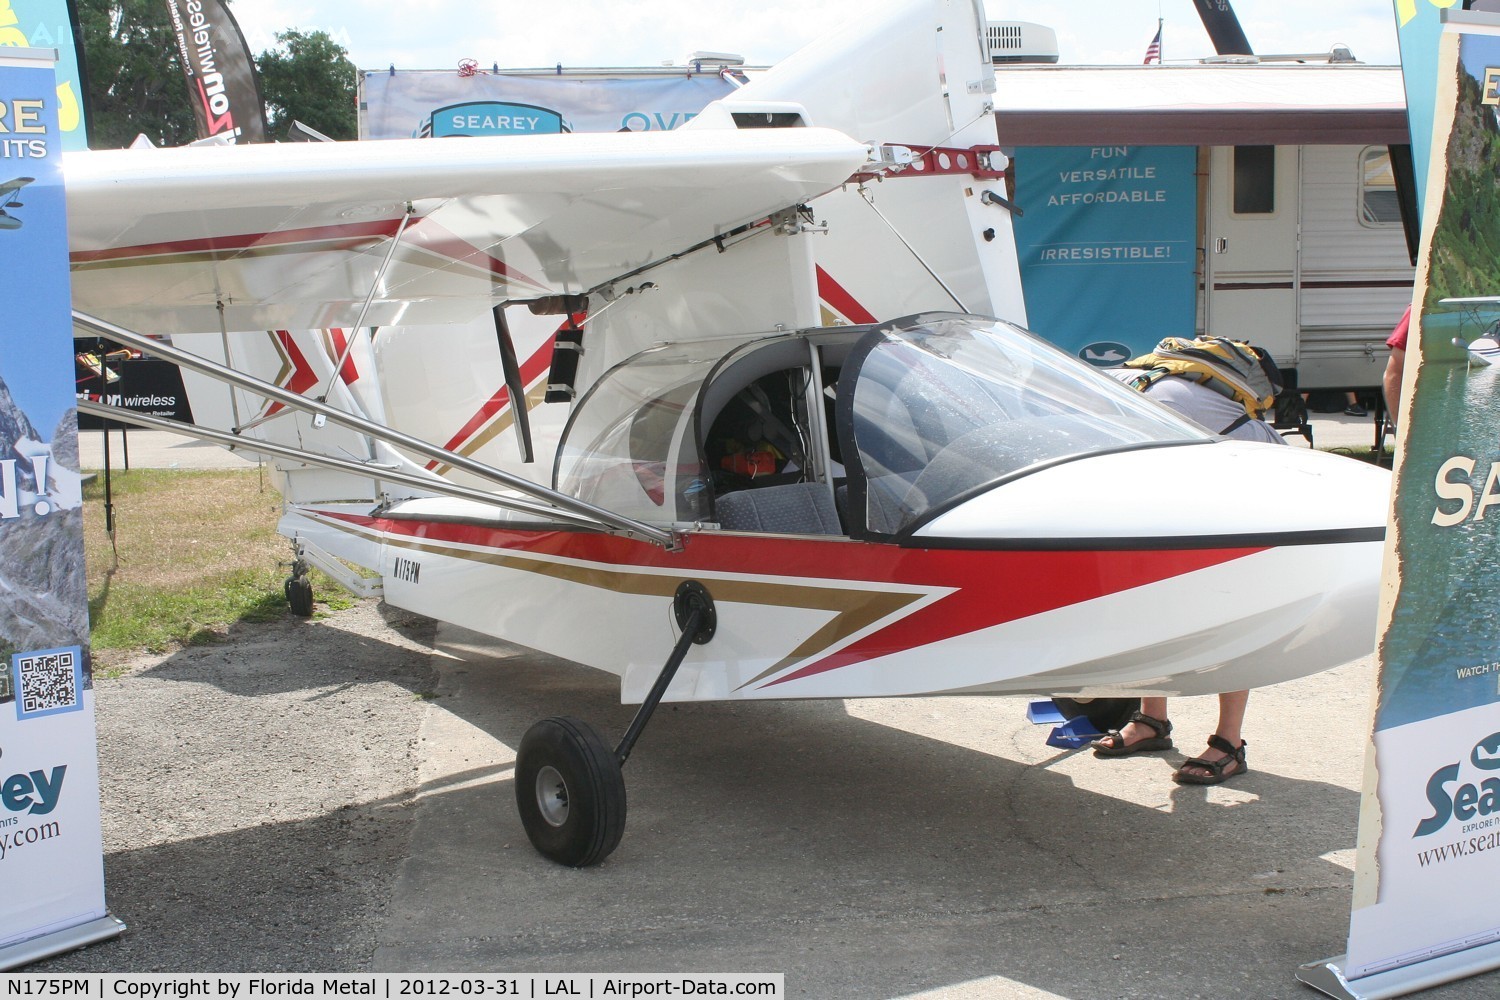 N175PM, 2007 Progressive Aerodyne Searey C/N 1MK436C, Searey